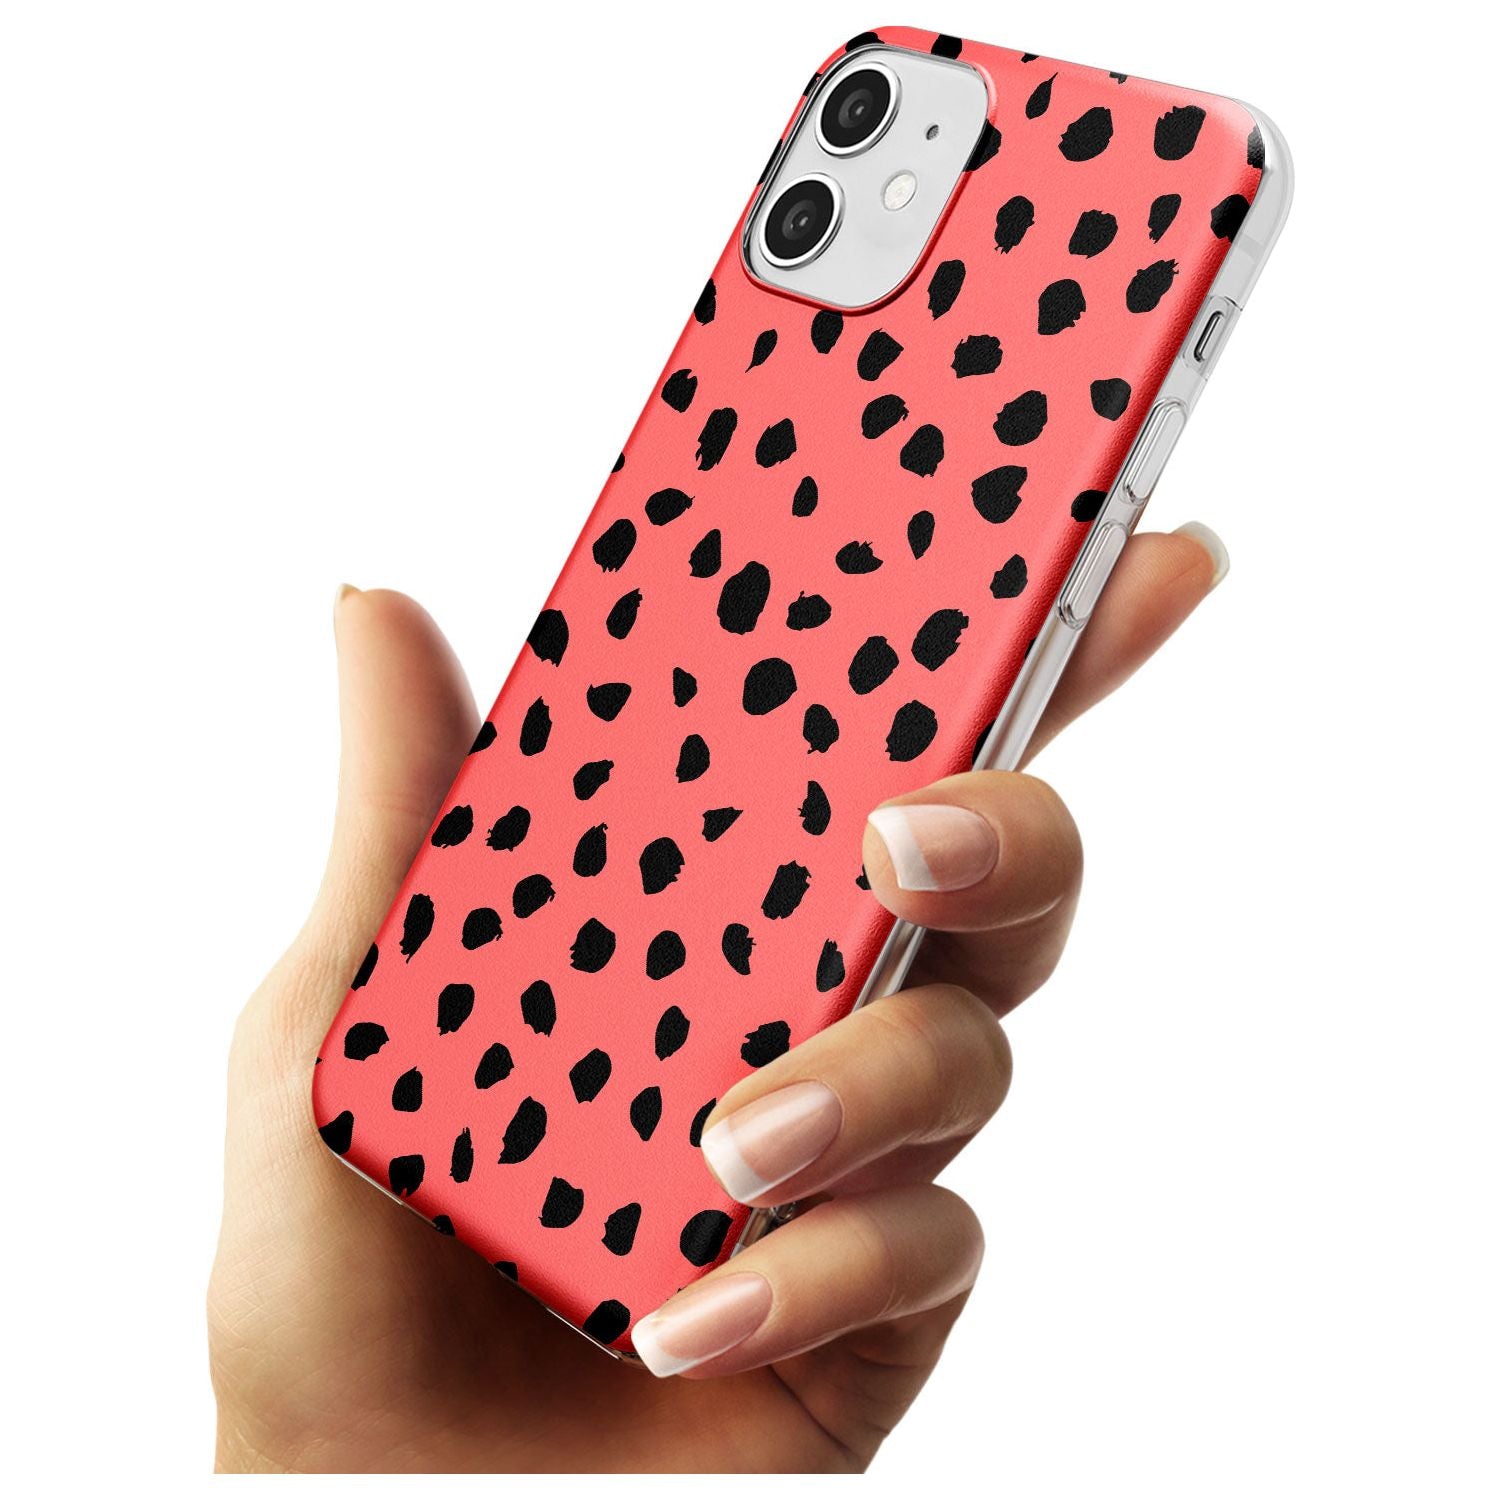 Black on Salmon Pink Dalmatian Polka Dot Spots Slim TPU Phone Case for iPhone 11